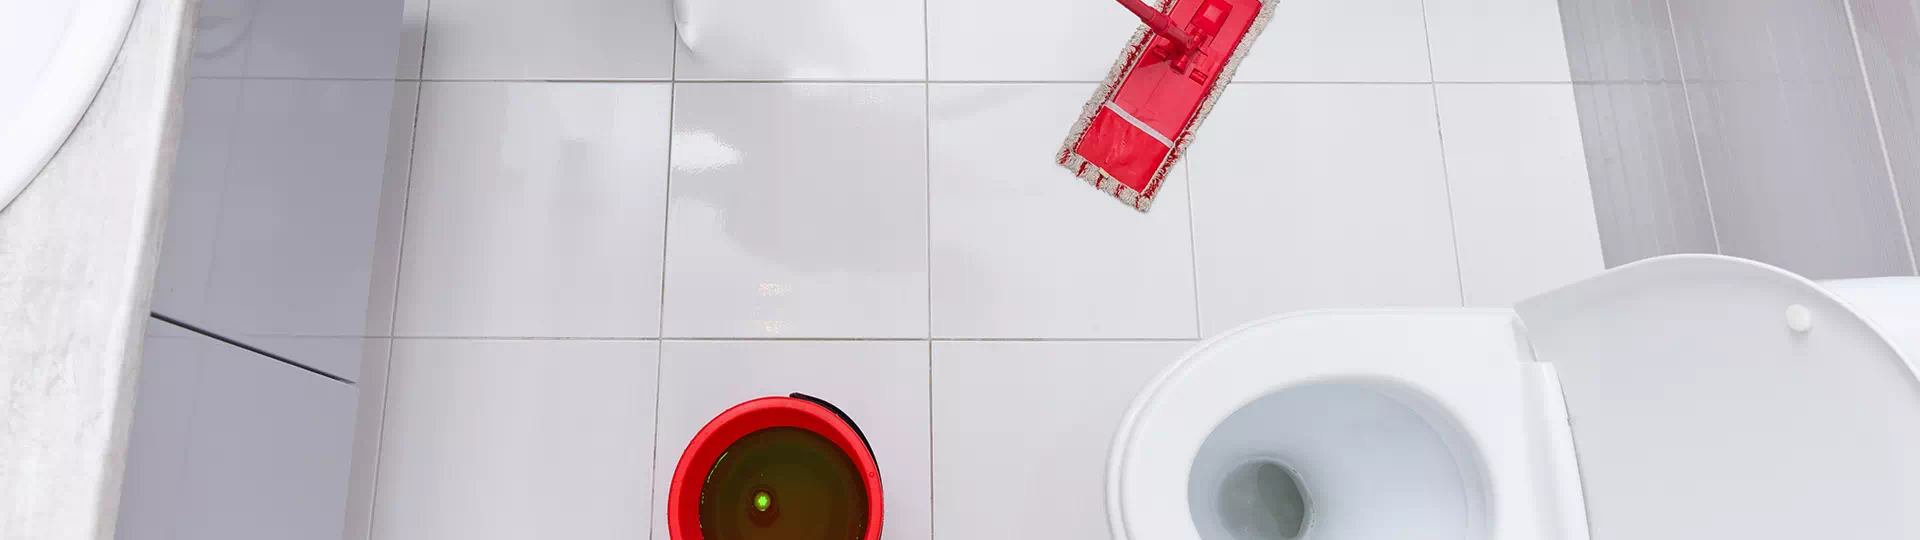 How to Clean Bathroom Floors - Simple Green